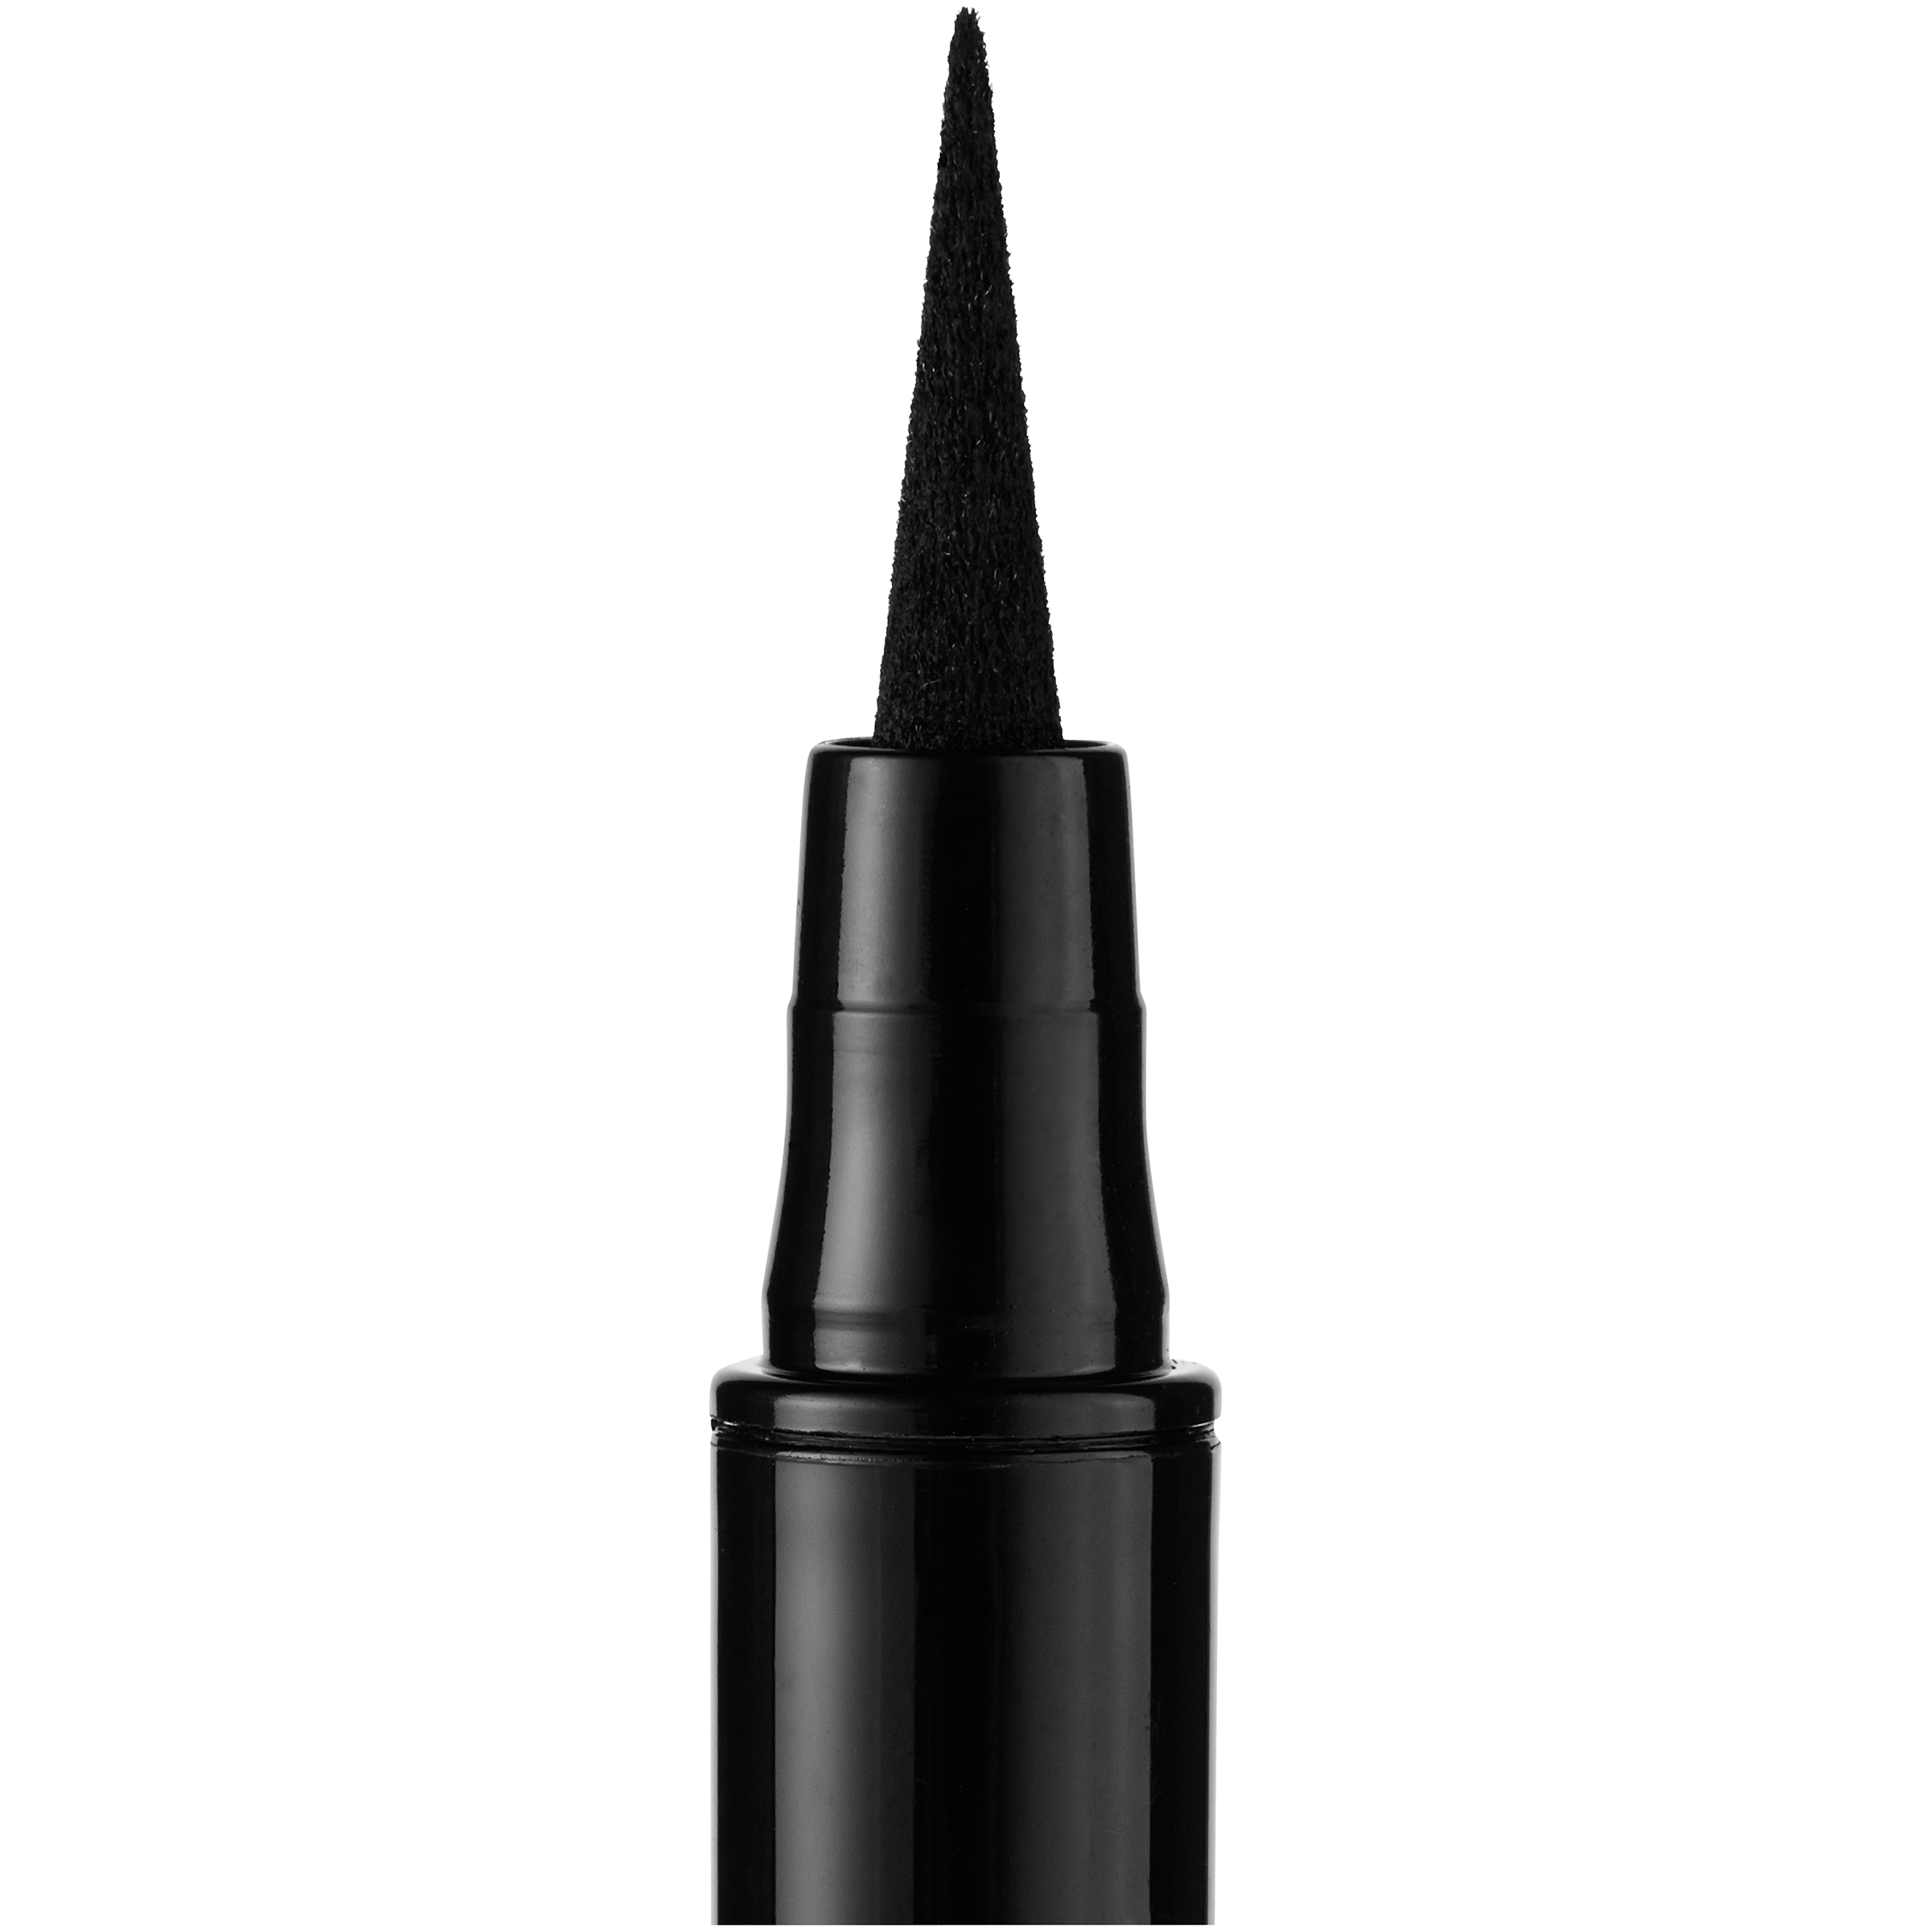 Maybelline Eye Studio Master Precise Pencil Eyeliner, Black - image 4 of 6